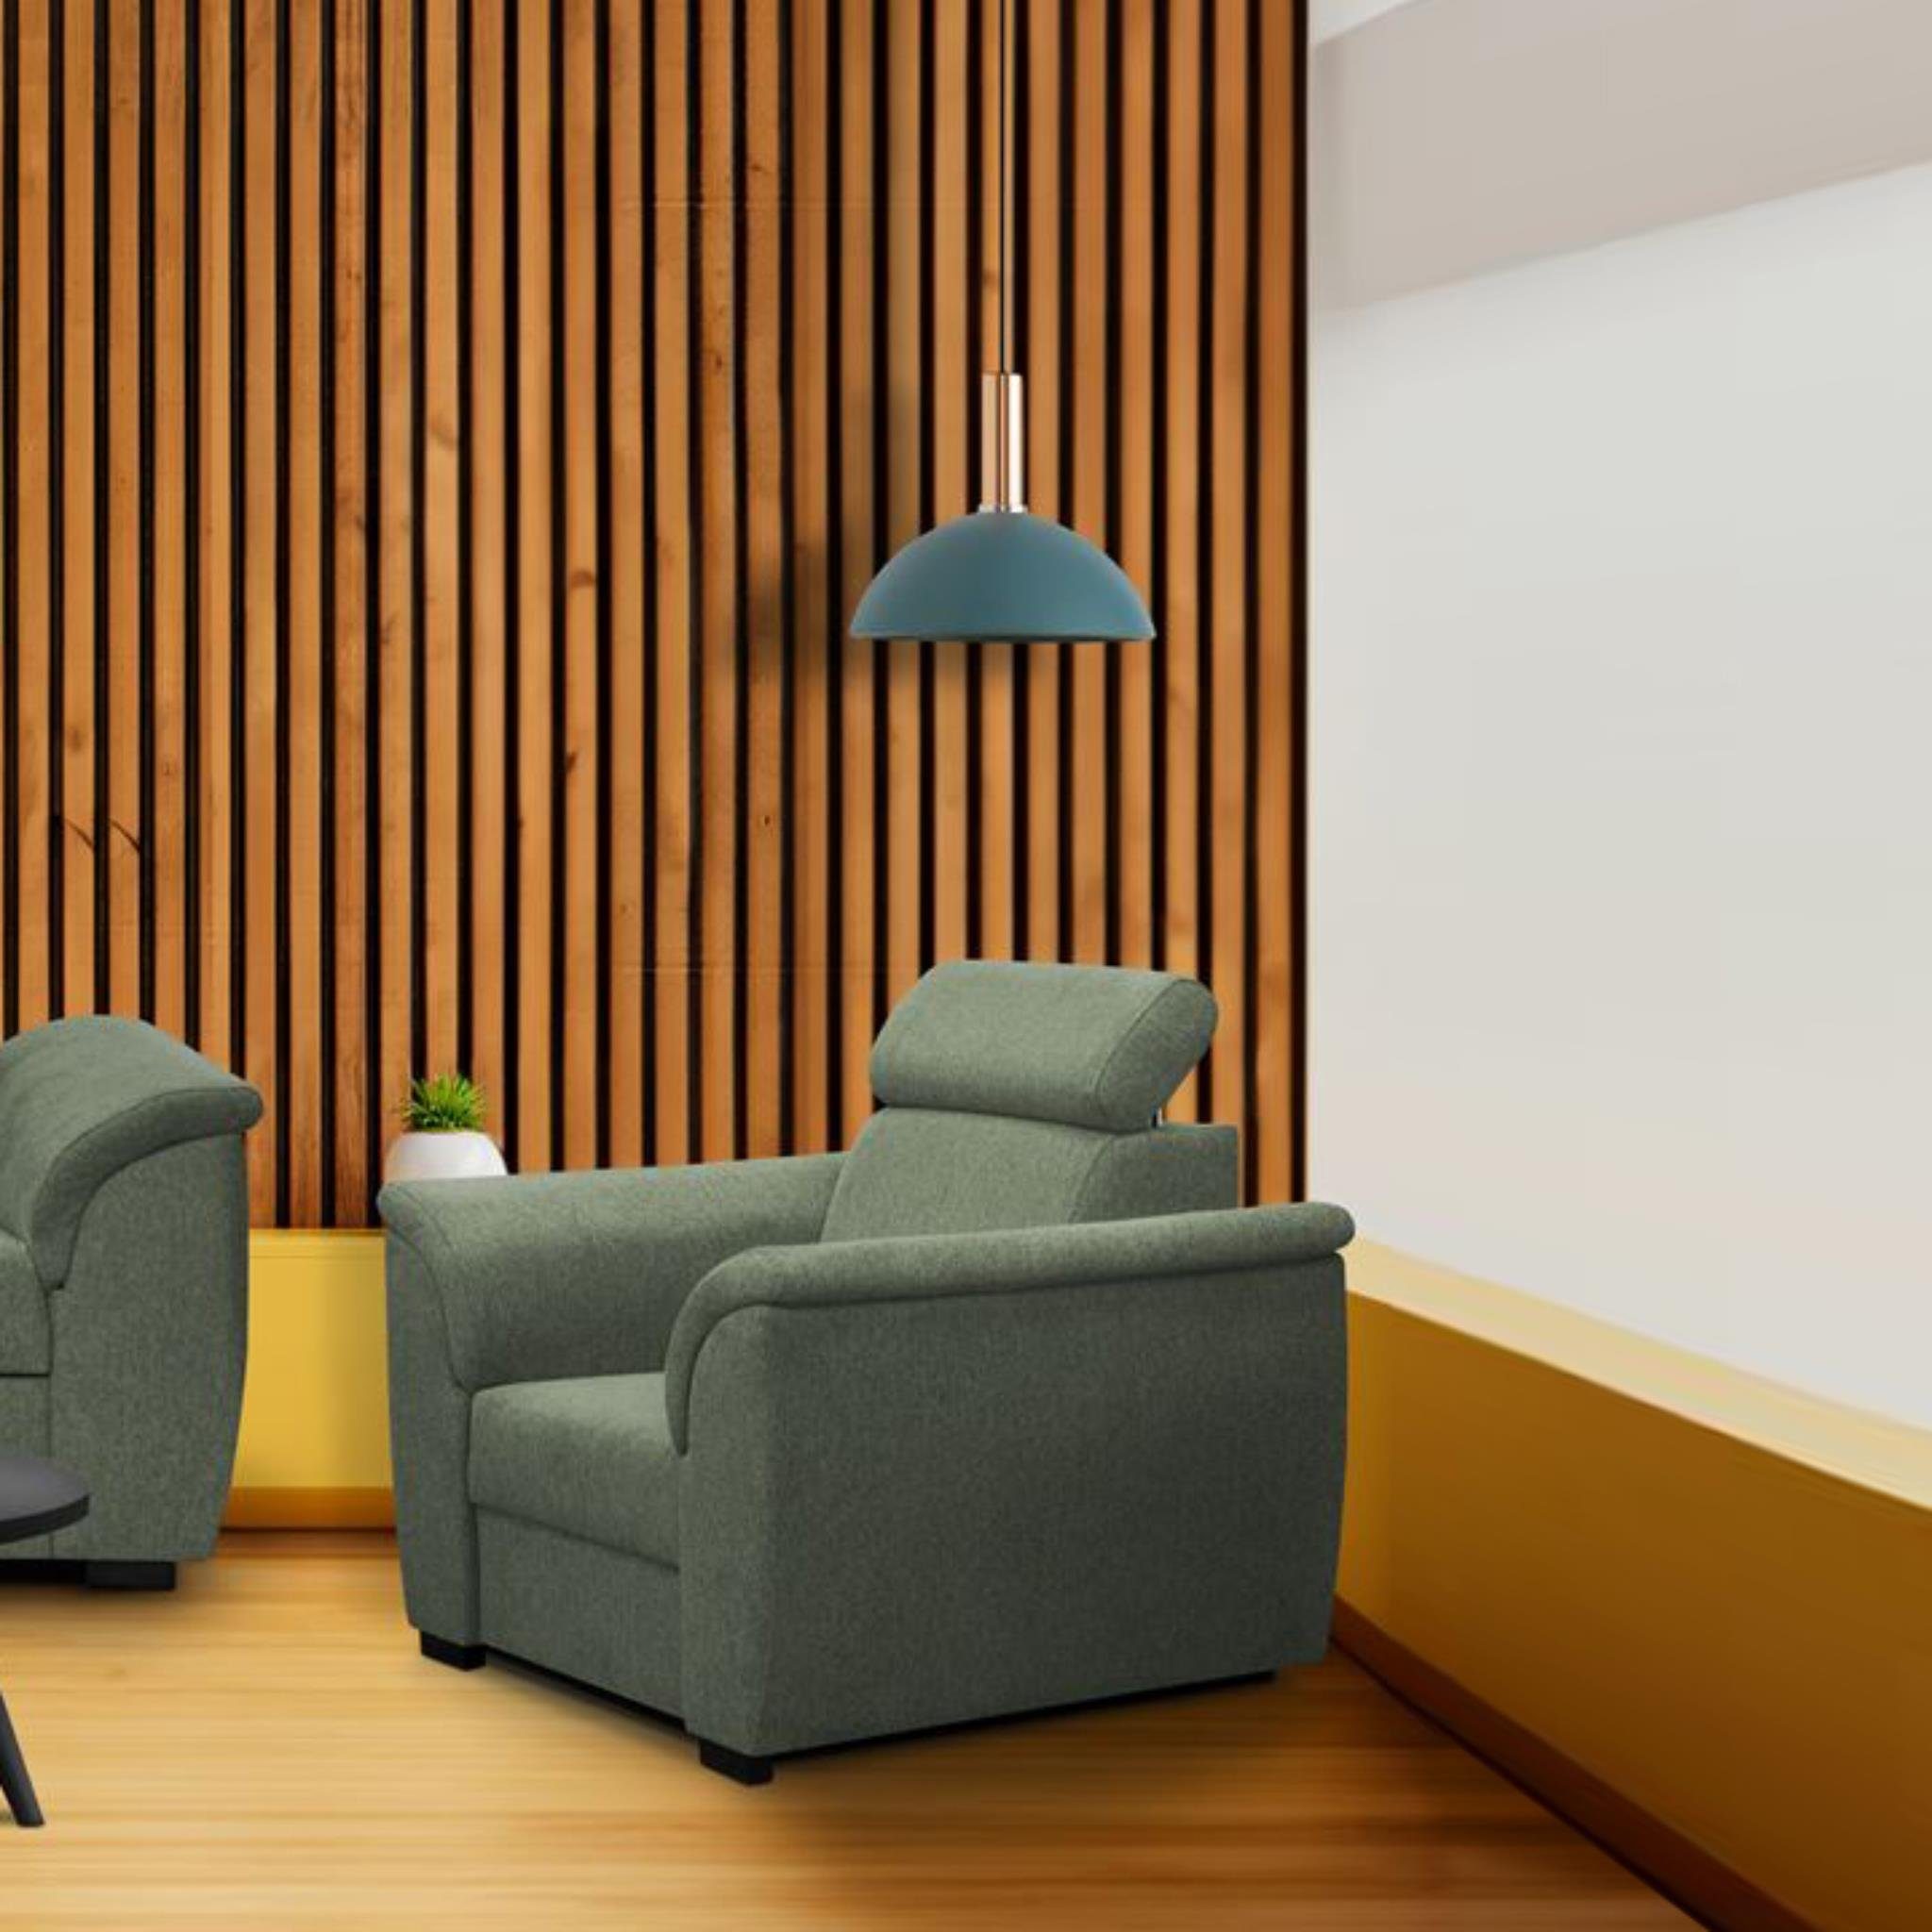 Beautysofa Relaxsessel Madera (modern Lounge Polstersessel mit Wellenfedern), stilvoll Sessel mit verstellbare Kopfstütze Grün (matana 06)